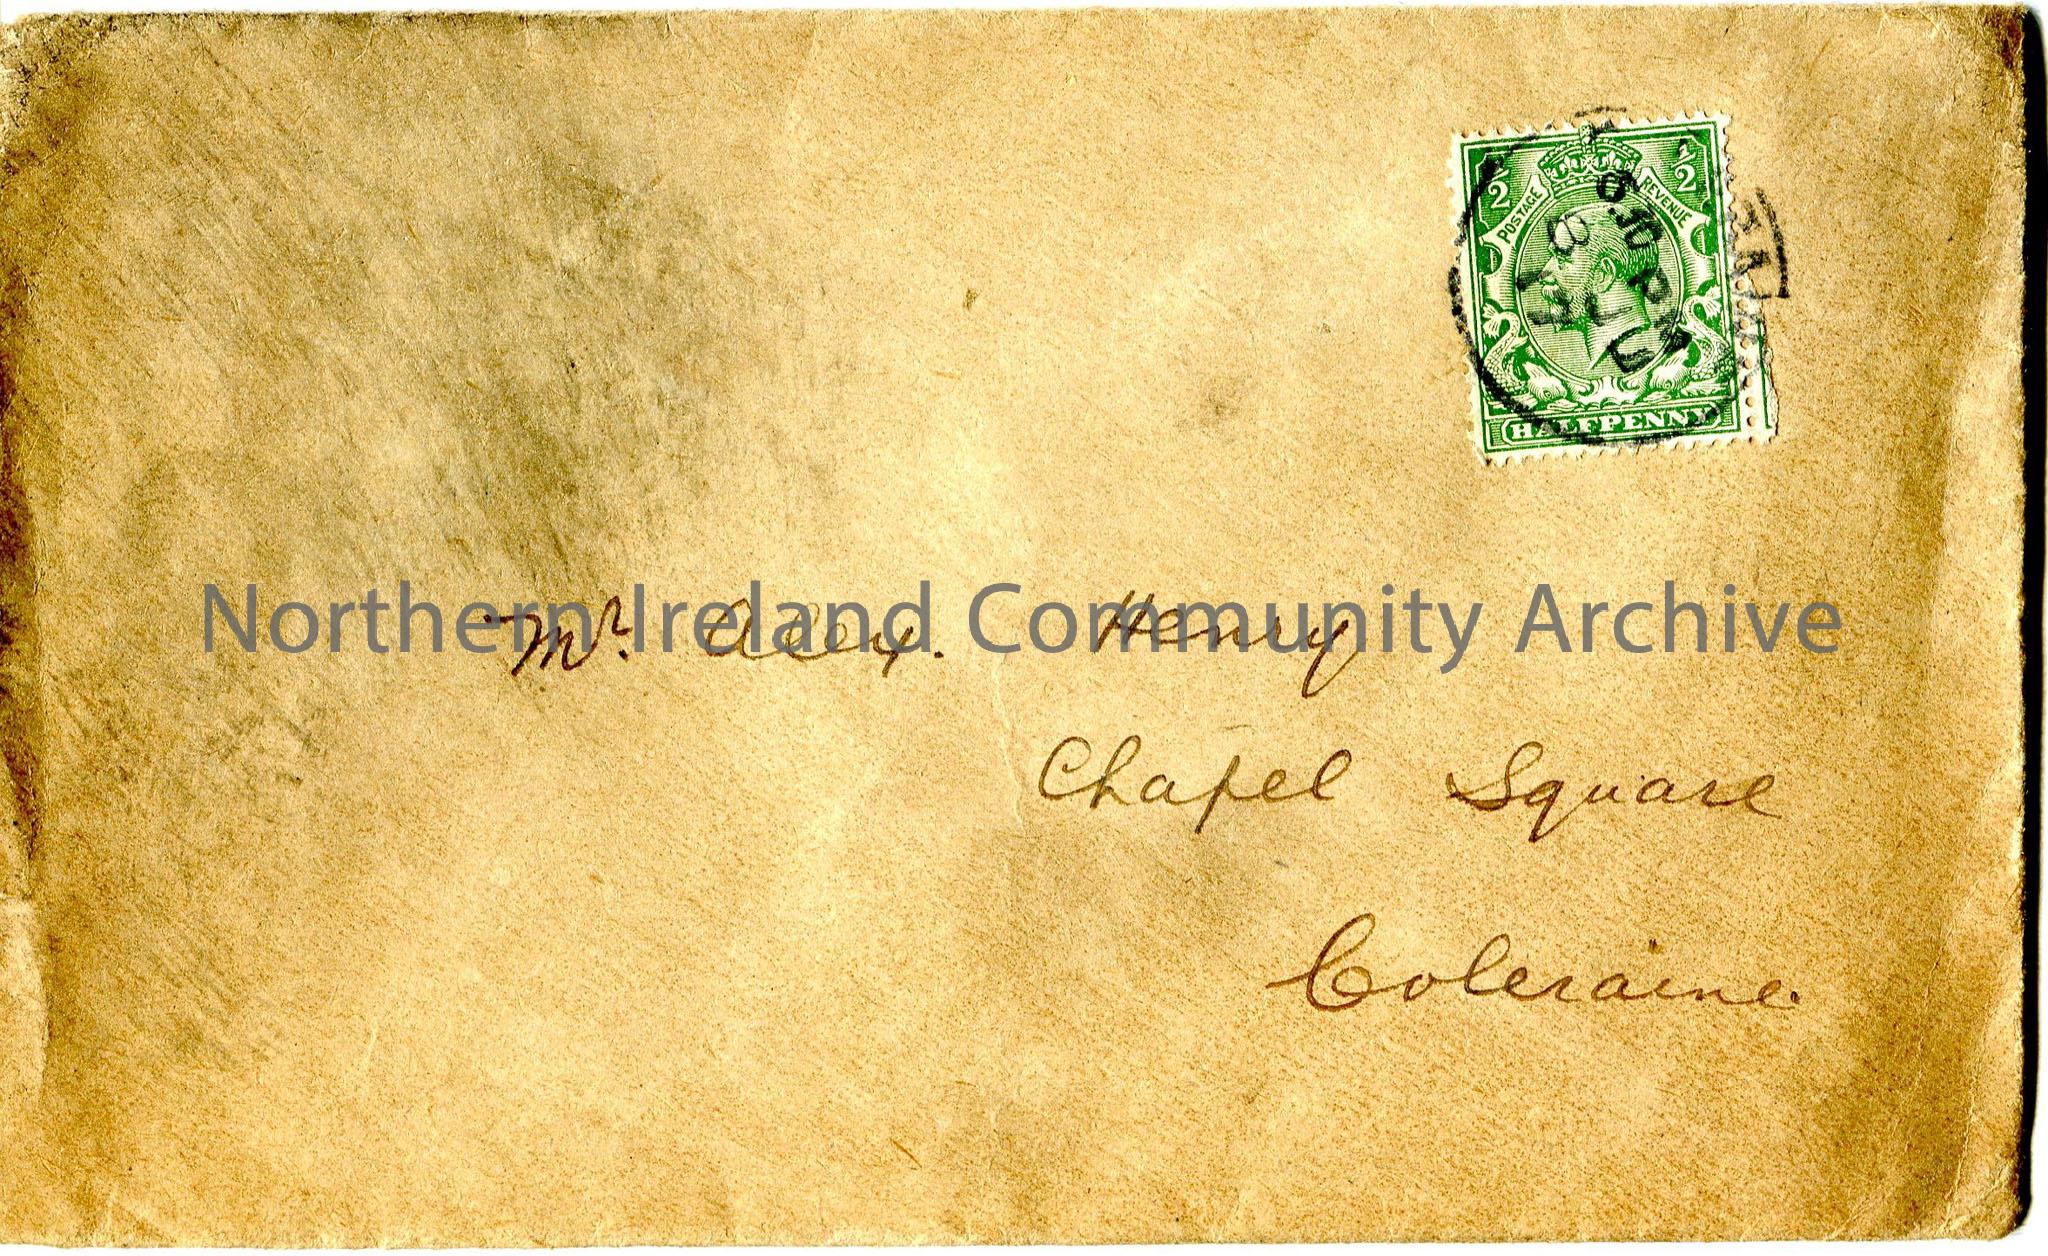 Buff addressed envelope with Coleraine PO stamp